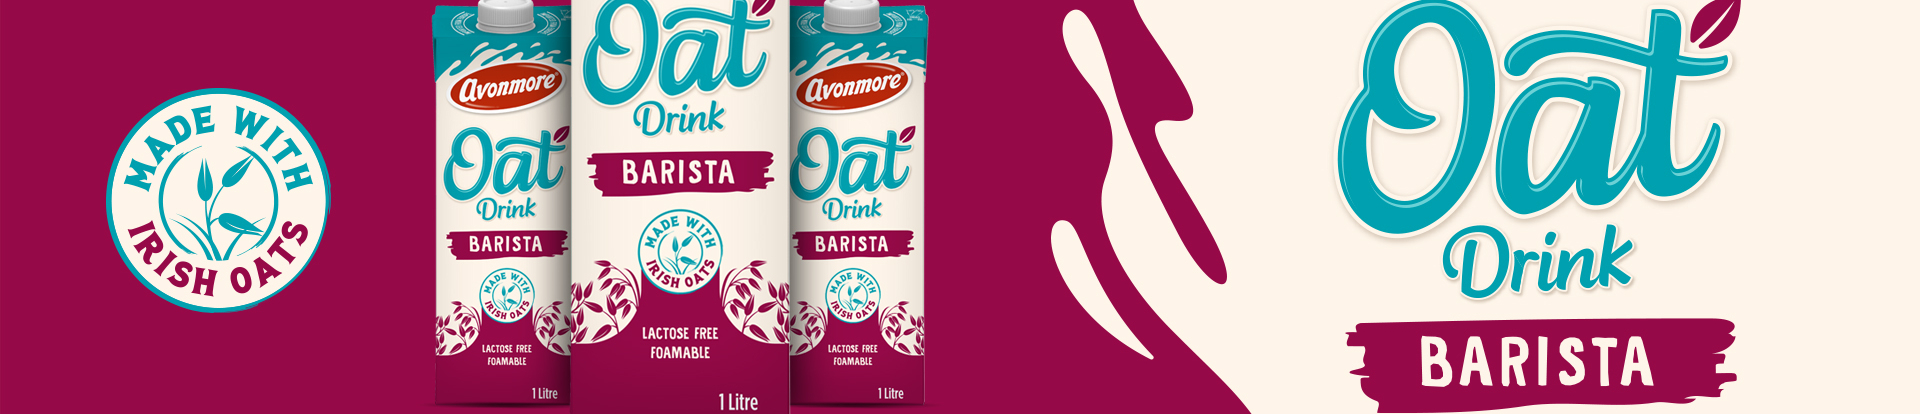 oat drink barista banner